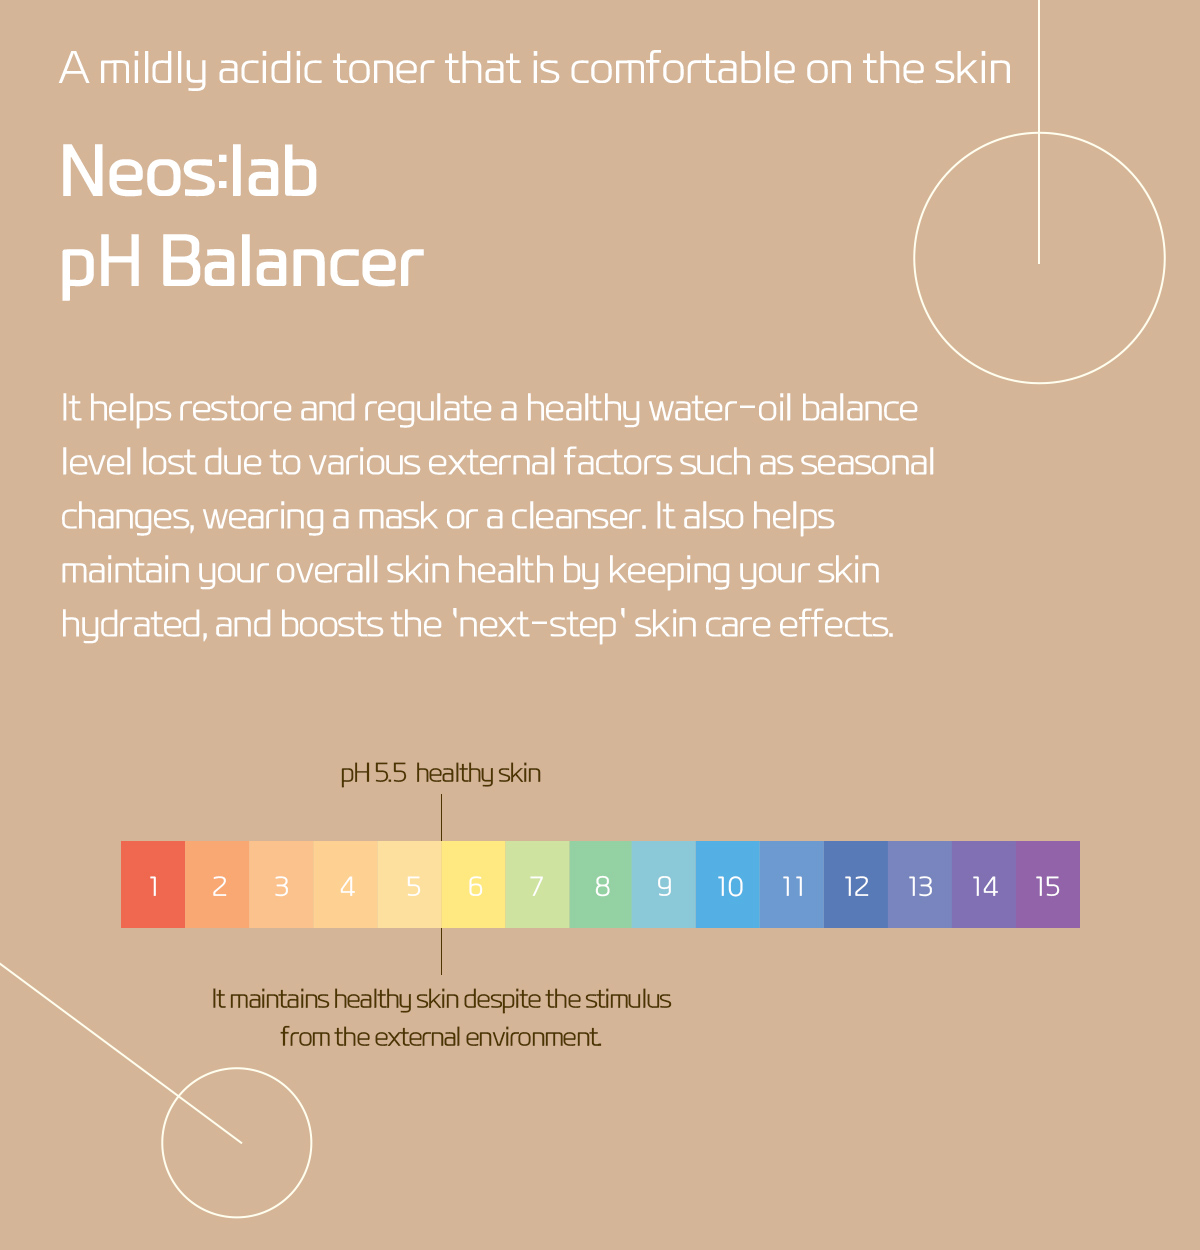 Neos:lab pH Balancer